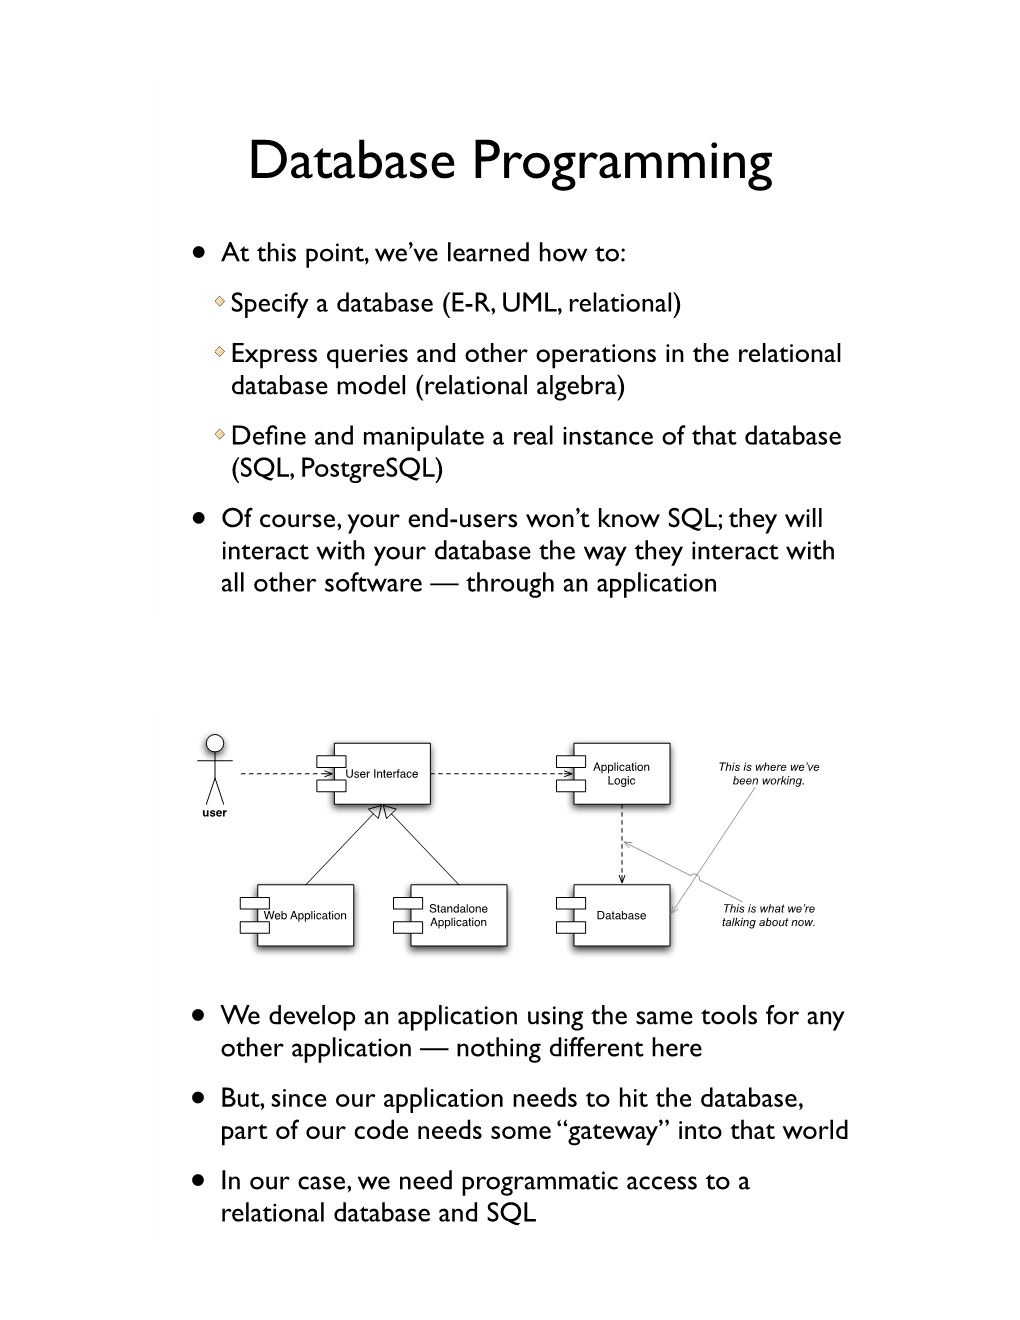 Database Programming